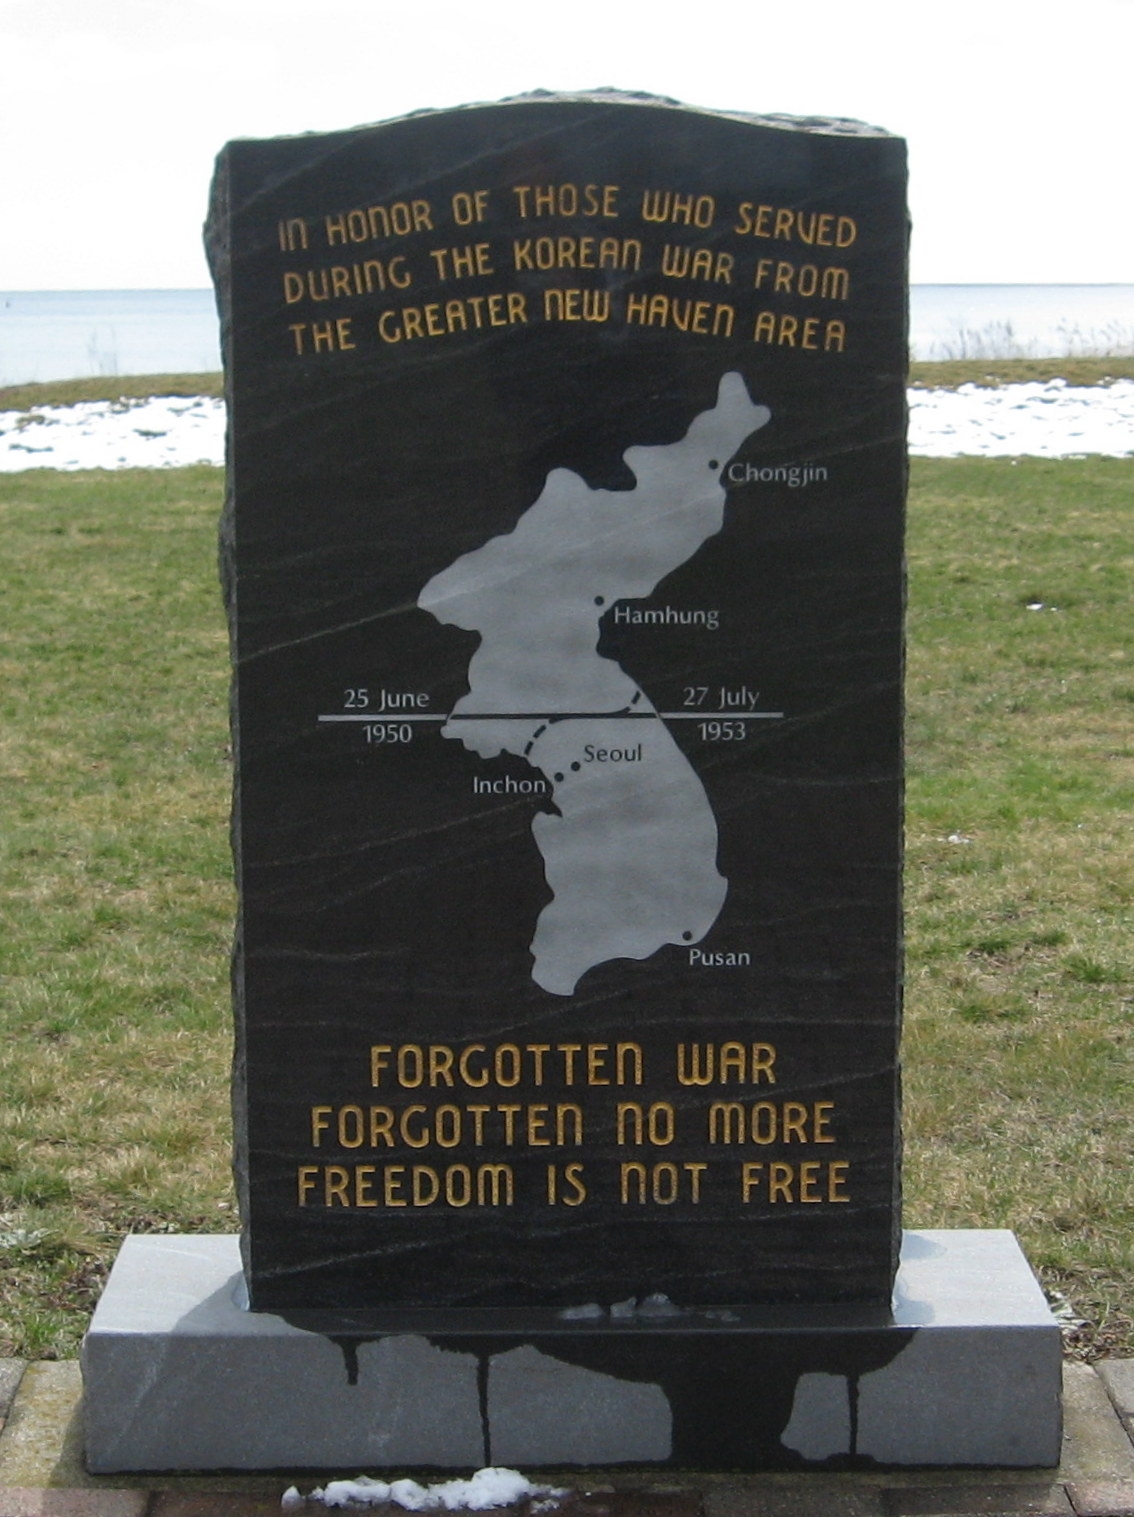 New Haven Area Korean War Monument